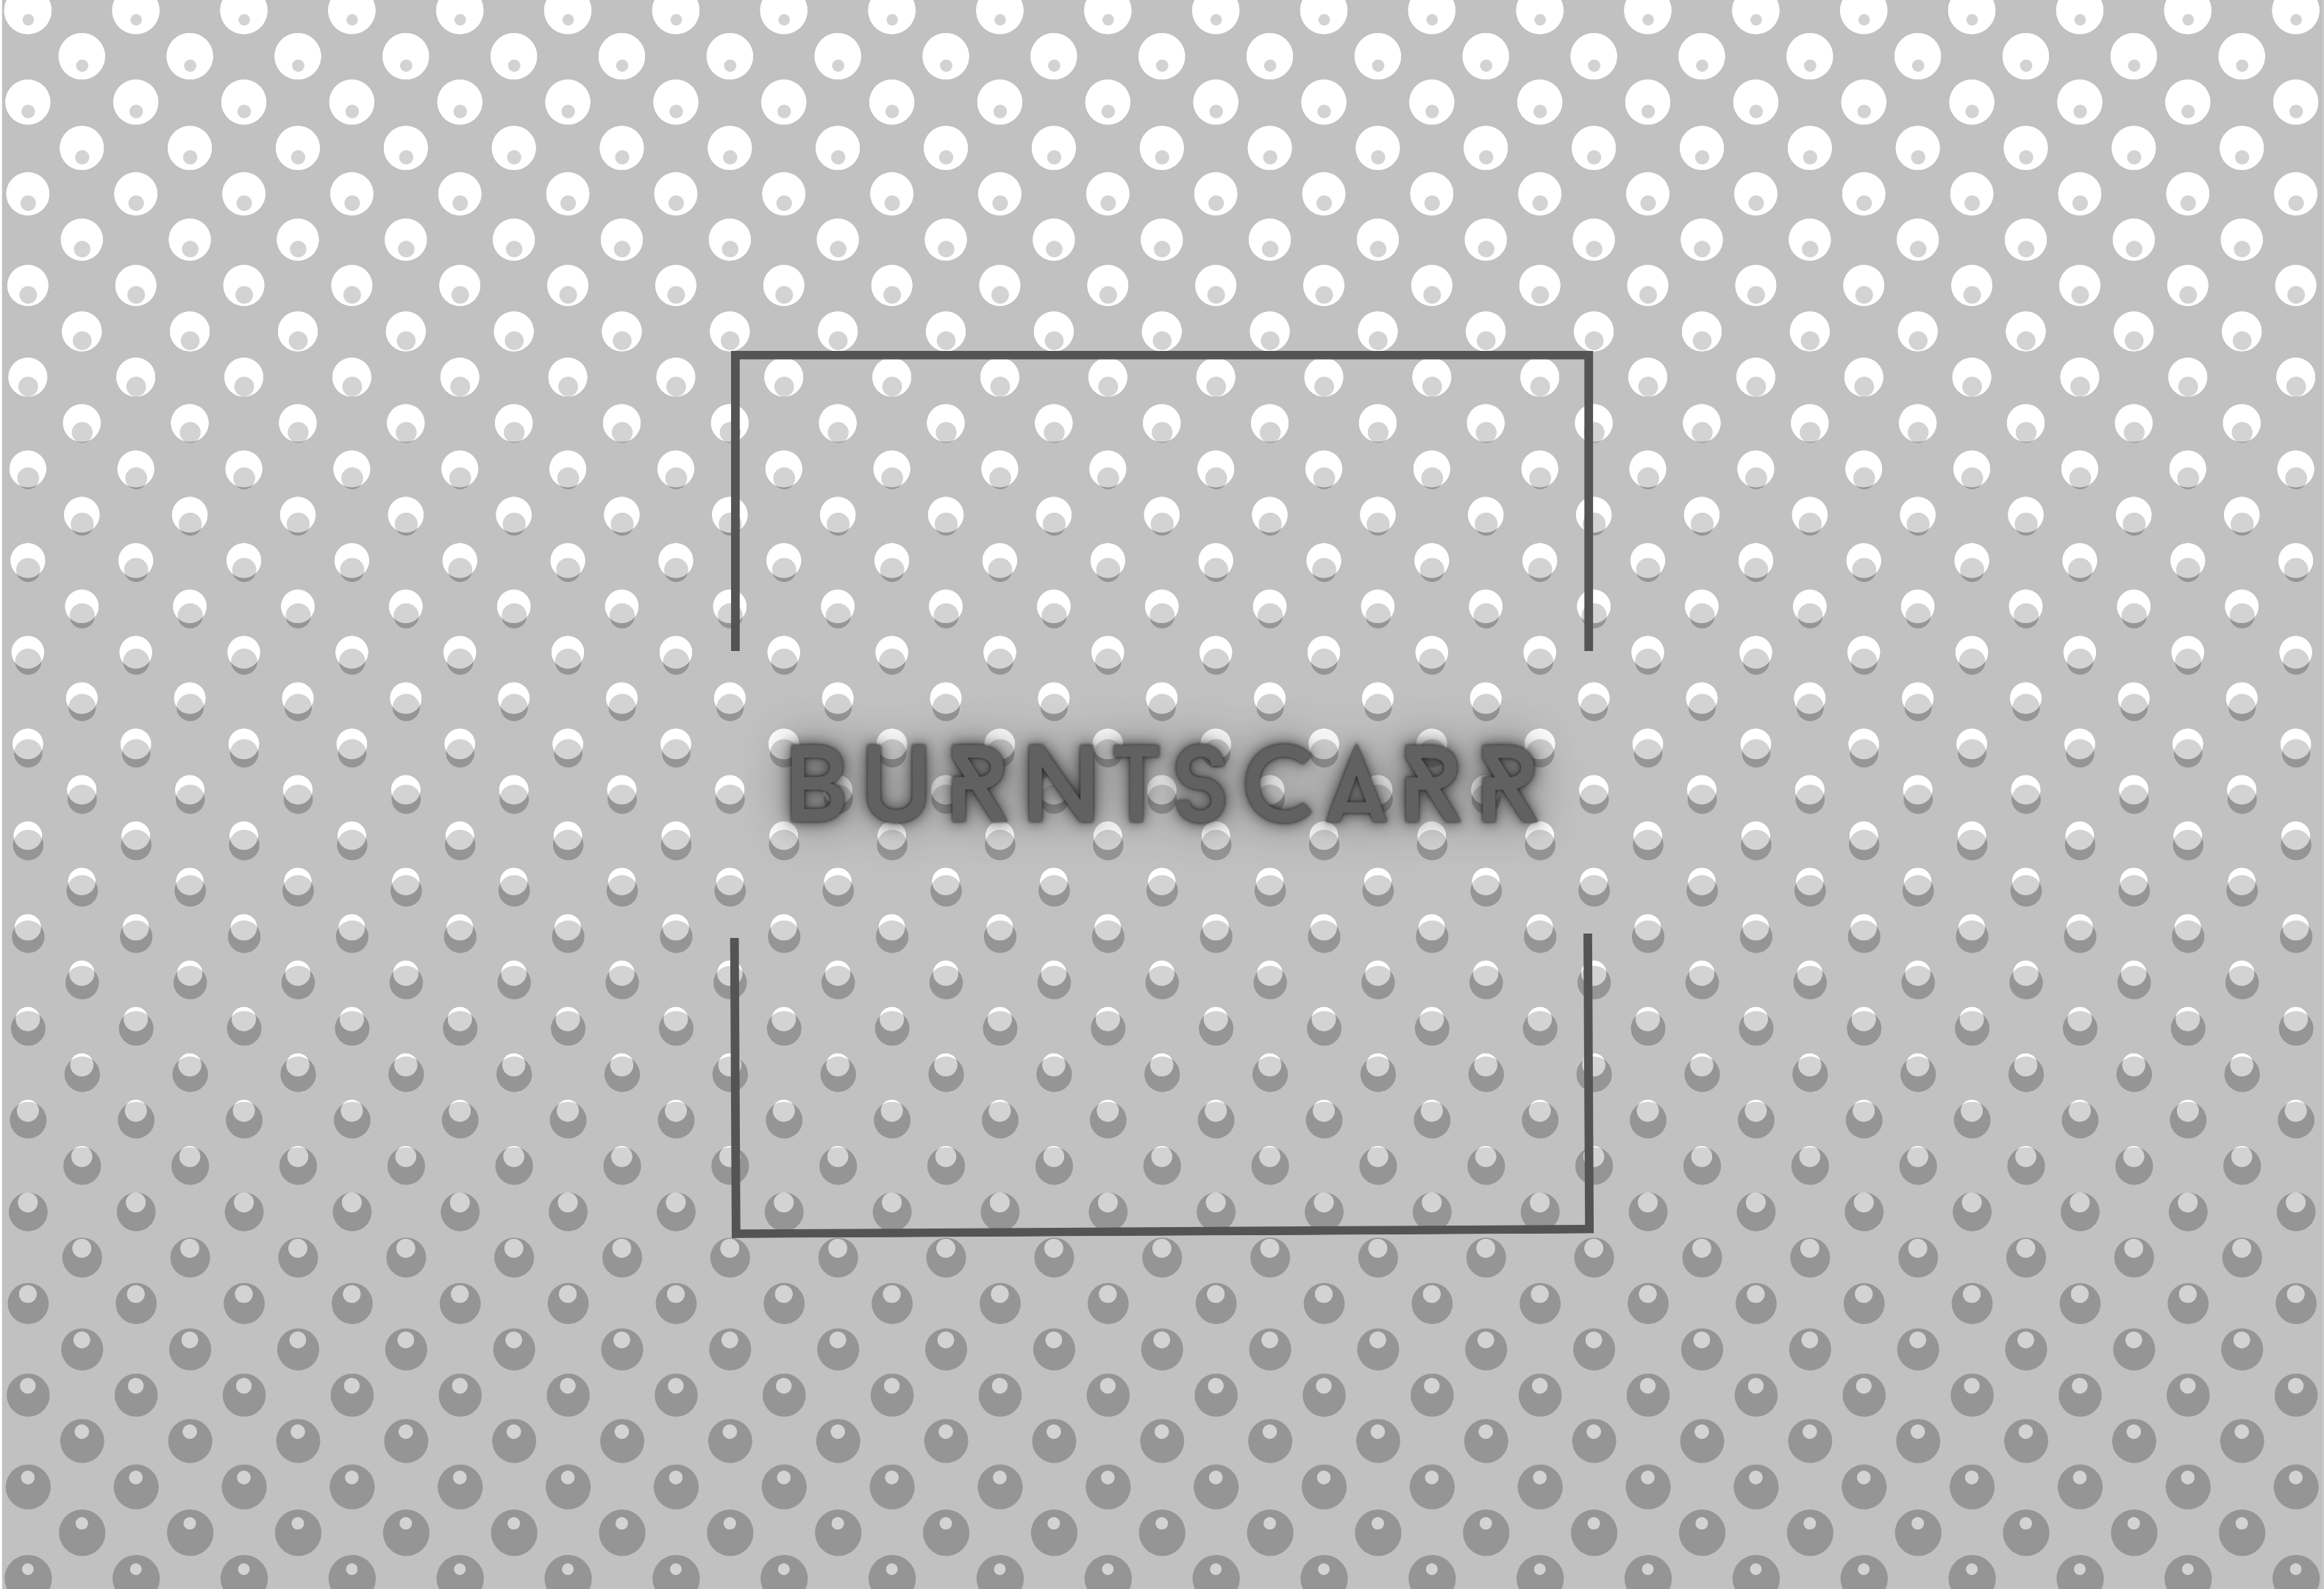 burntscarr - Changes